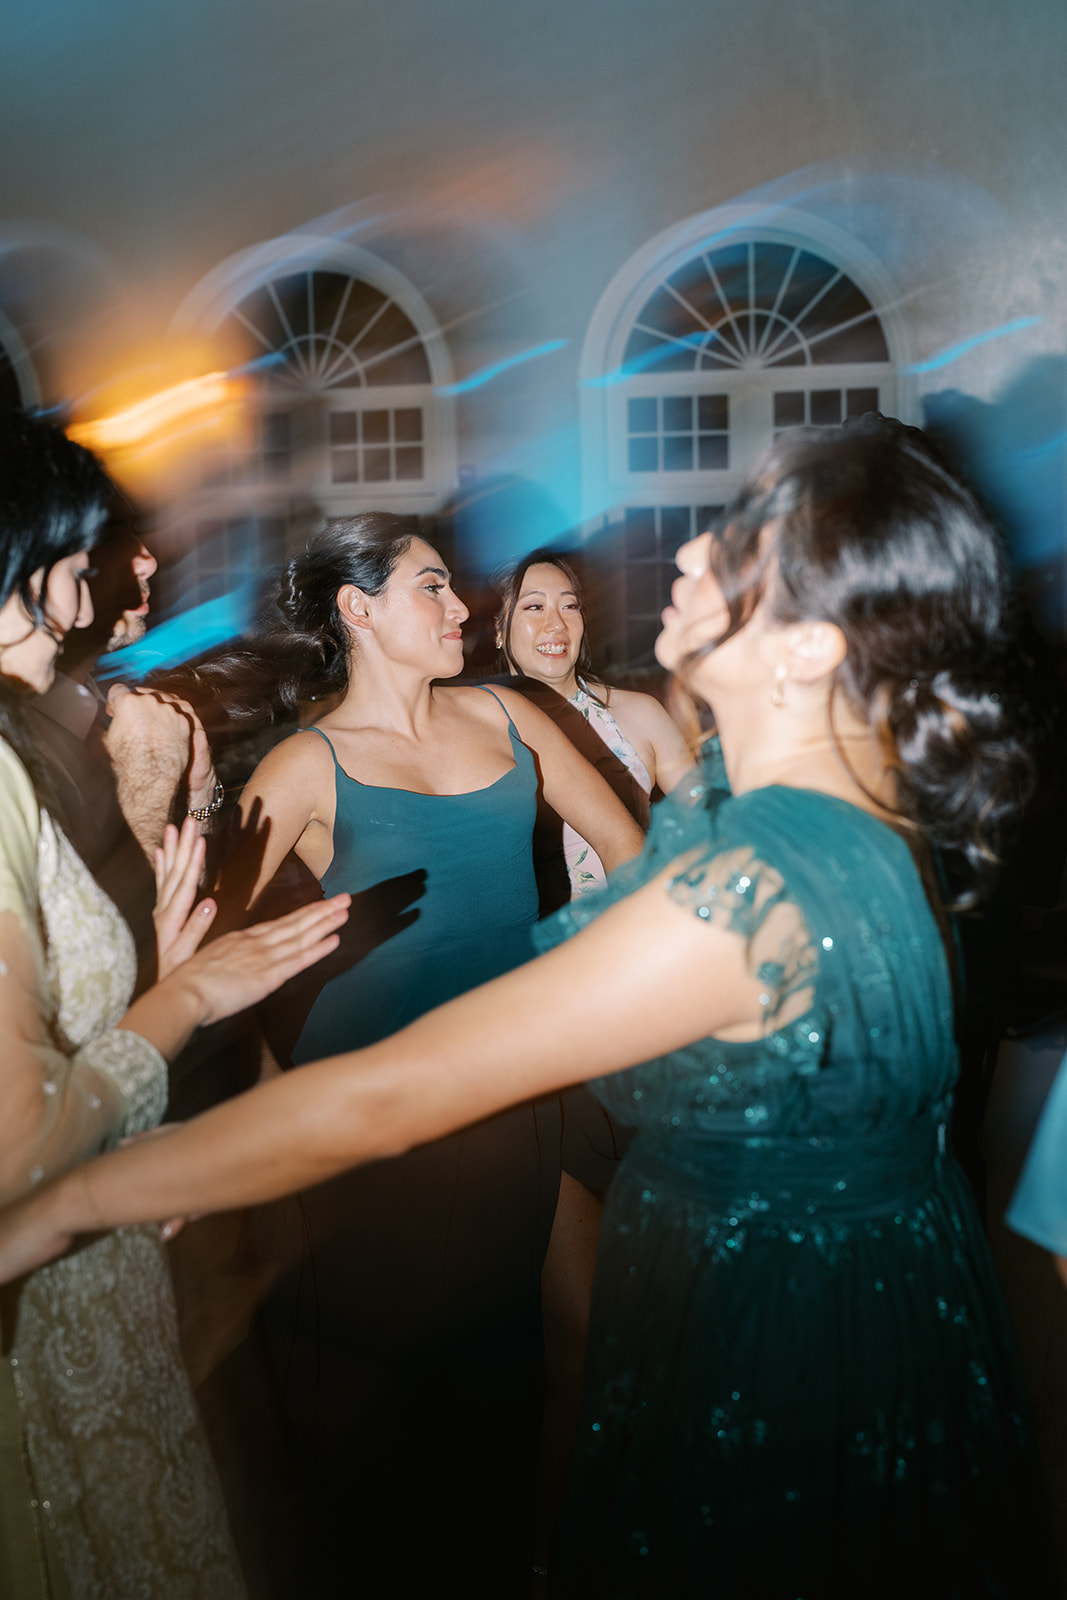 morais vineyard winery virginia bealeton wedding party vibes fun wedding nighttime dancing club dancing dance floor